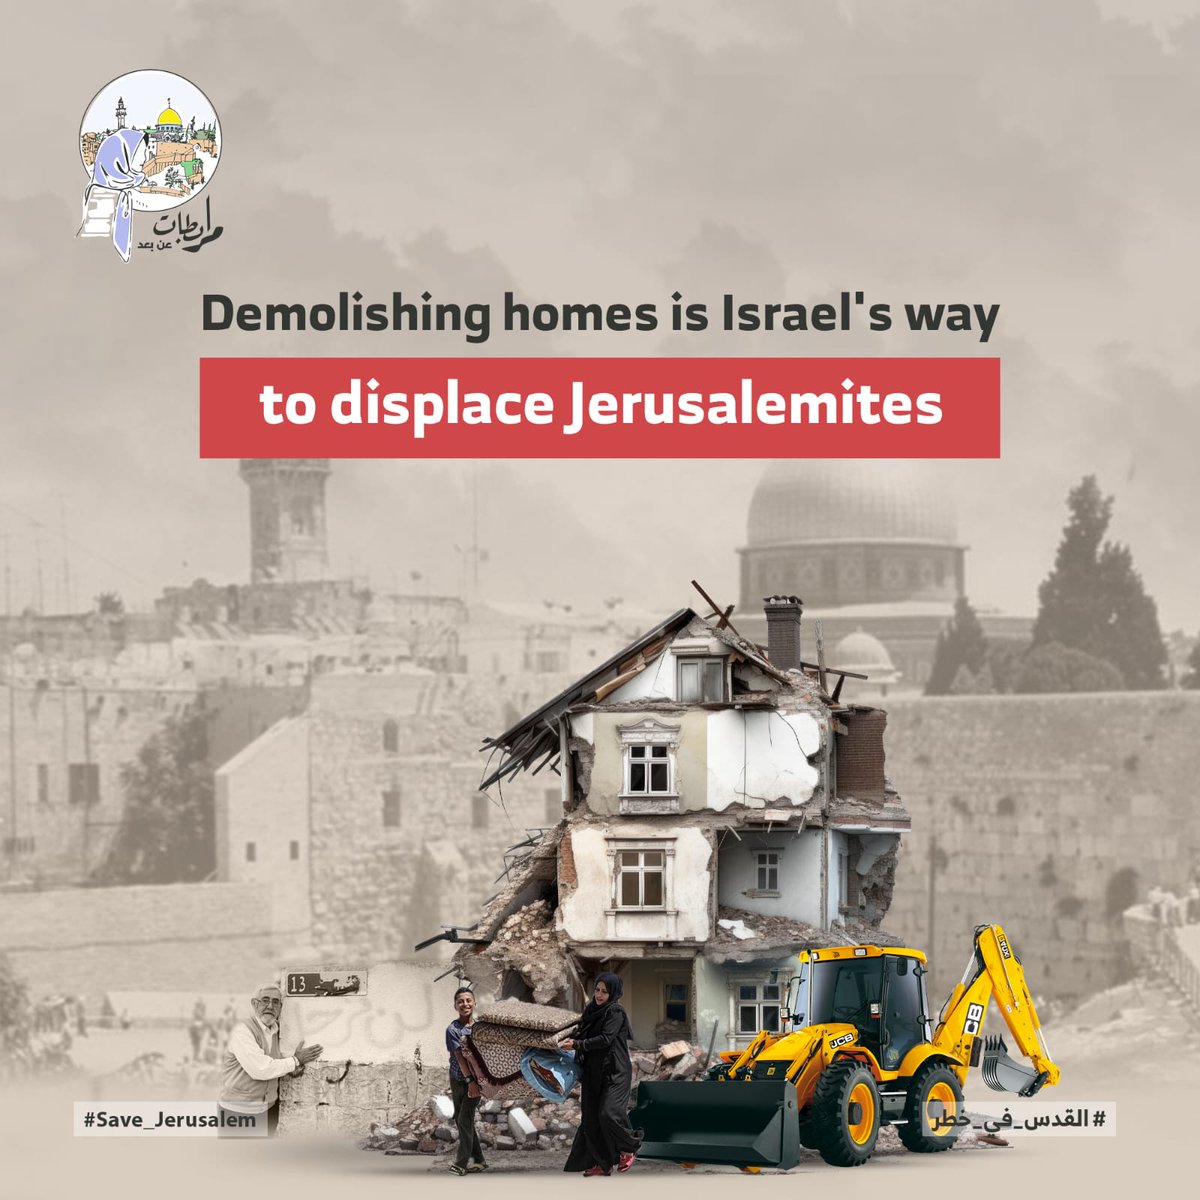 Demolishing homes is Israel's way to displace Jerusalemites 
#SaveJerusalem